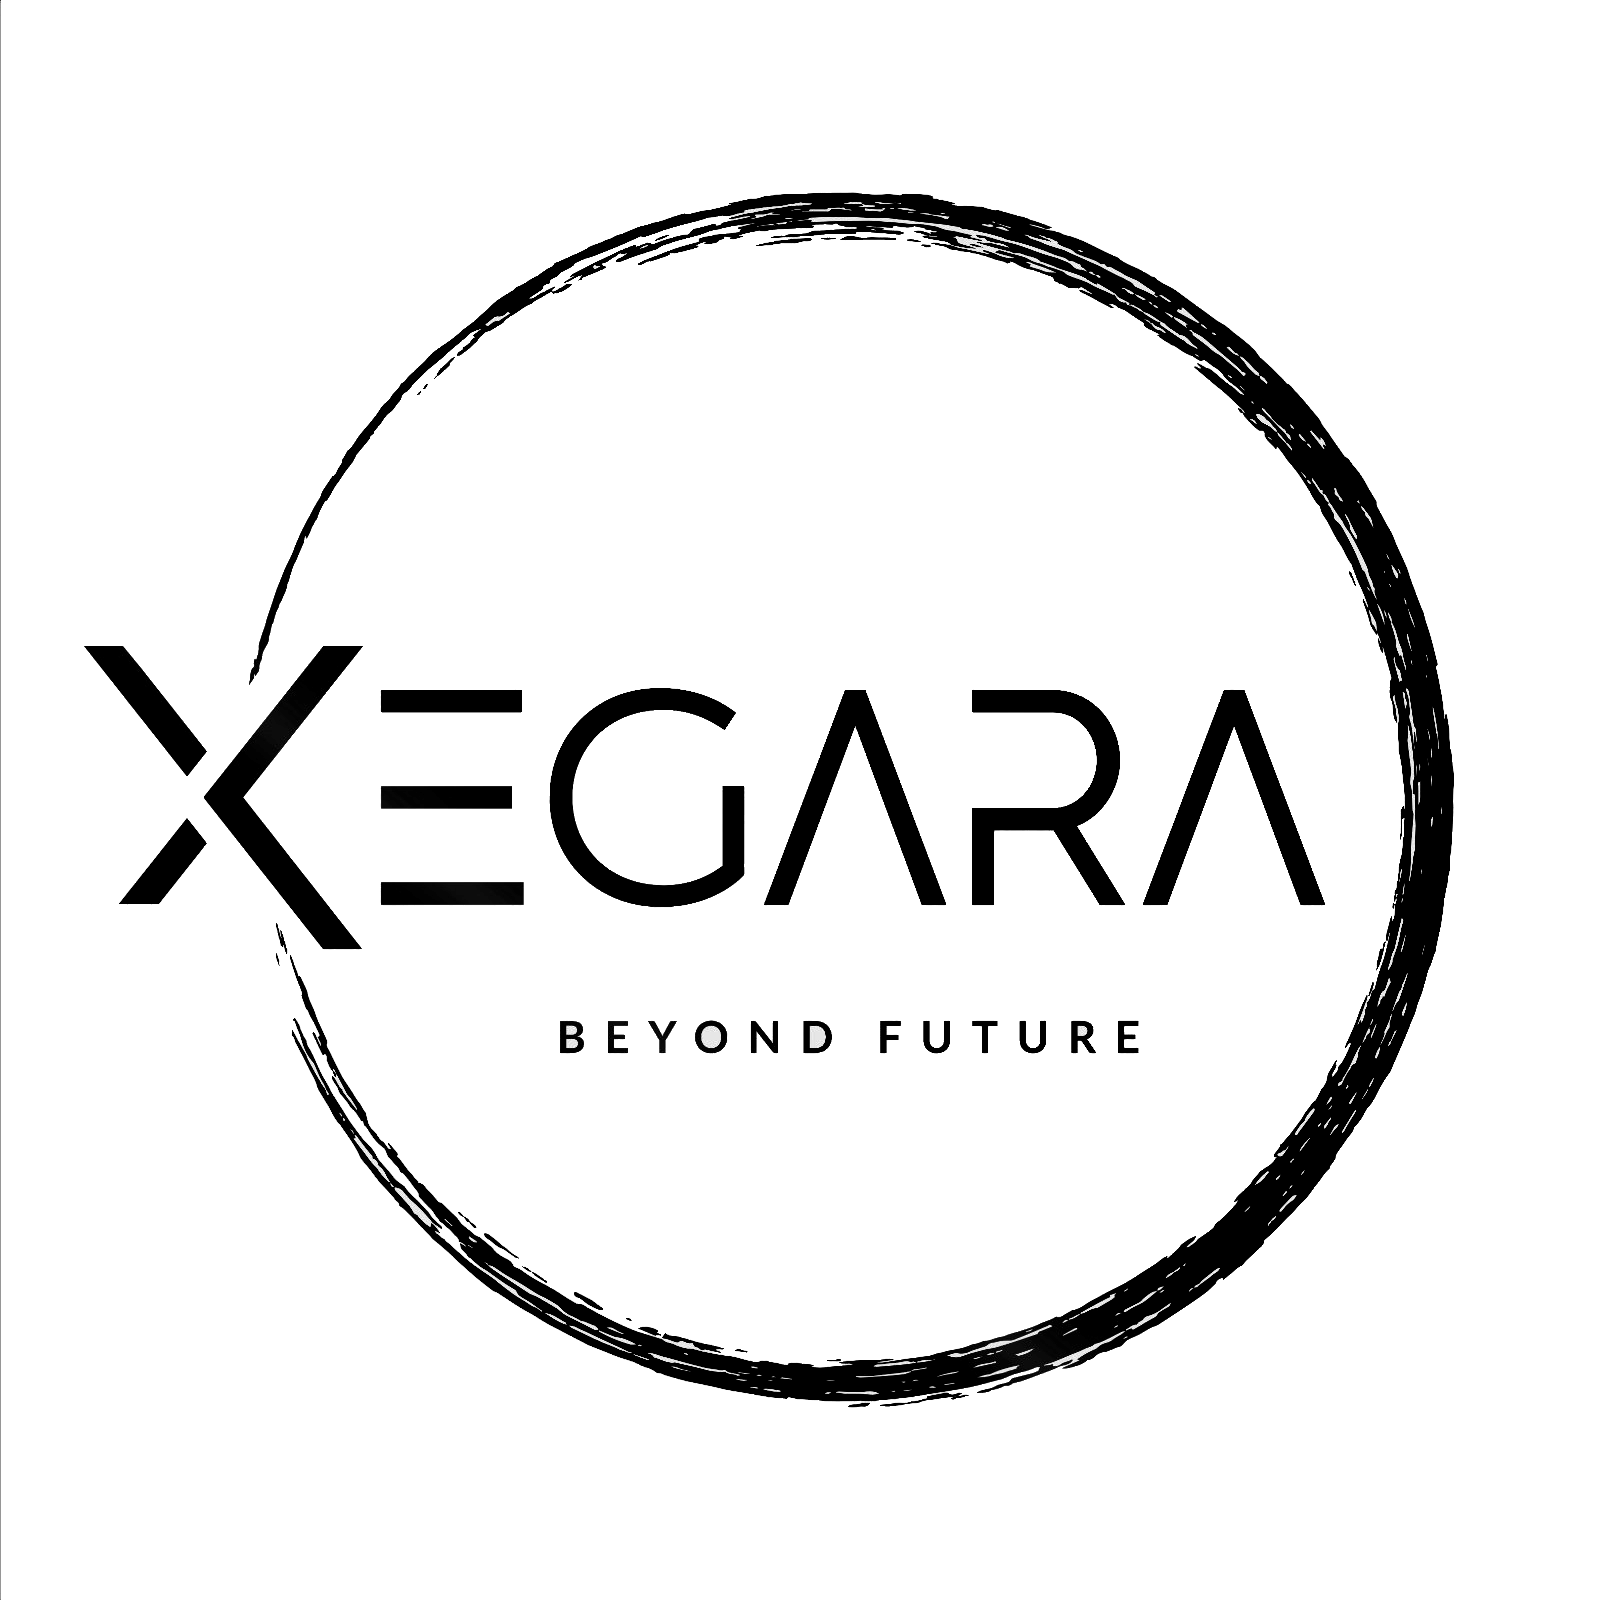 Xegara Logo Beyond Future